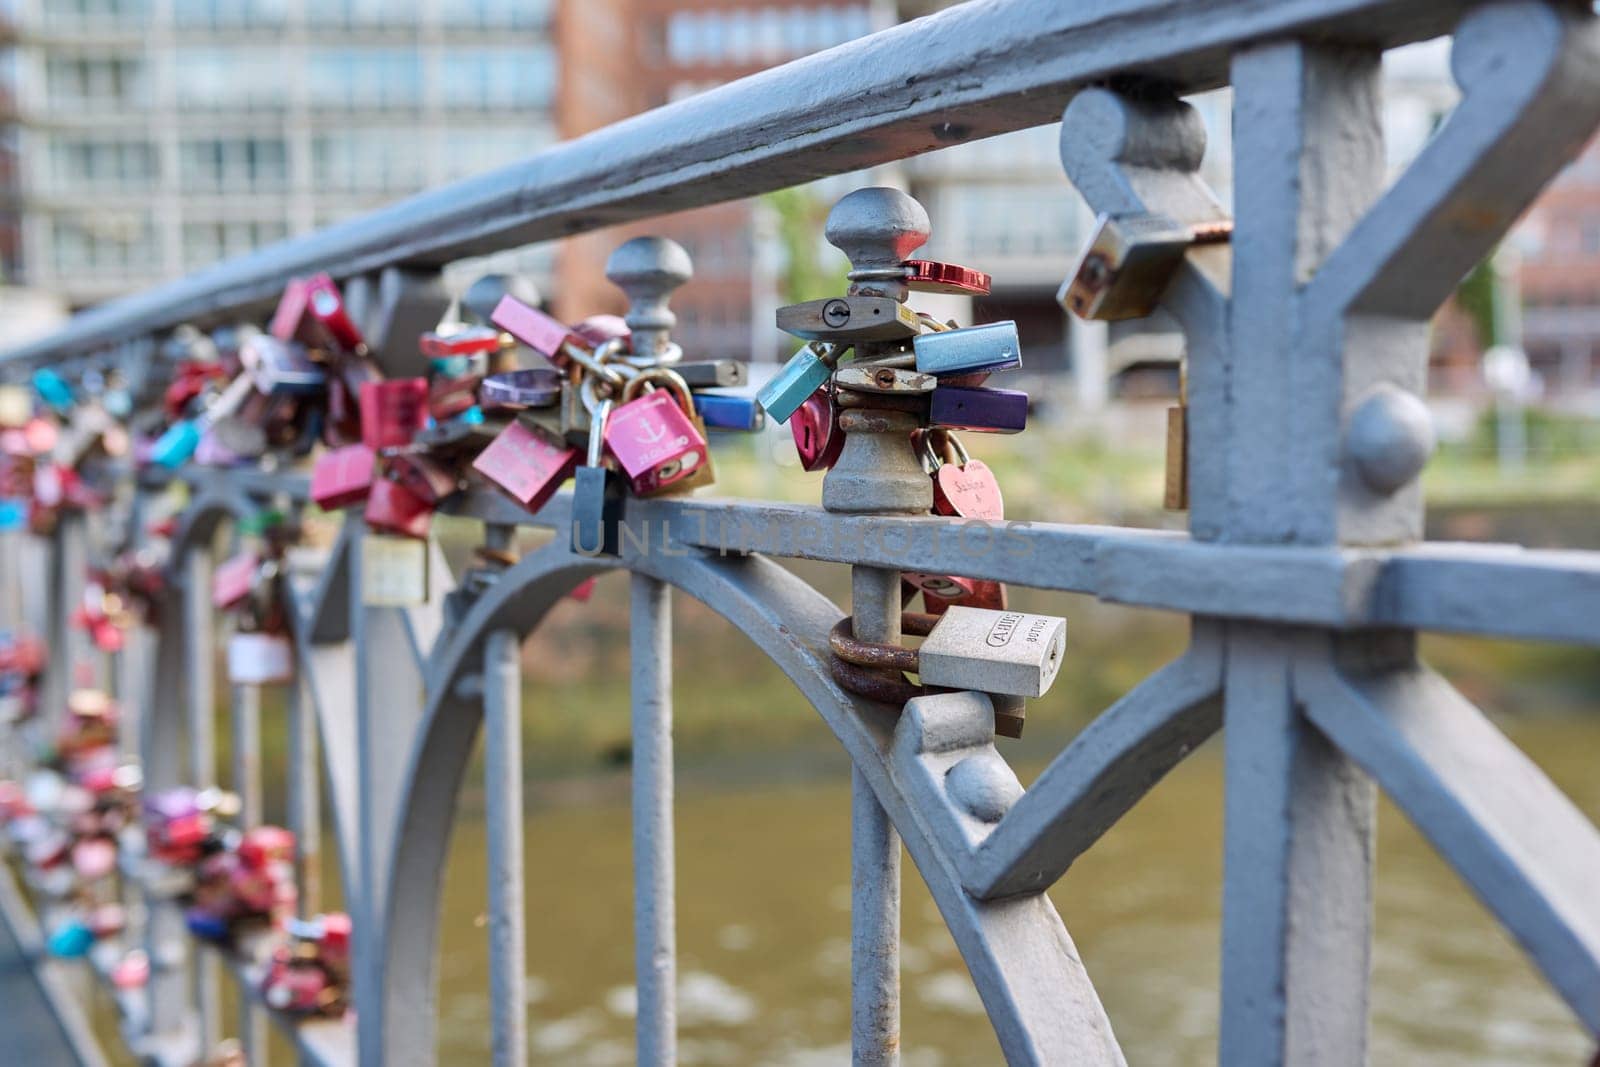 Hamburg, Germany, 1.08.2023, many closed heart love locks on the bridge. Romantic symbols signs